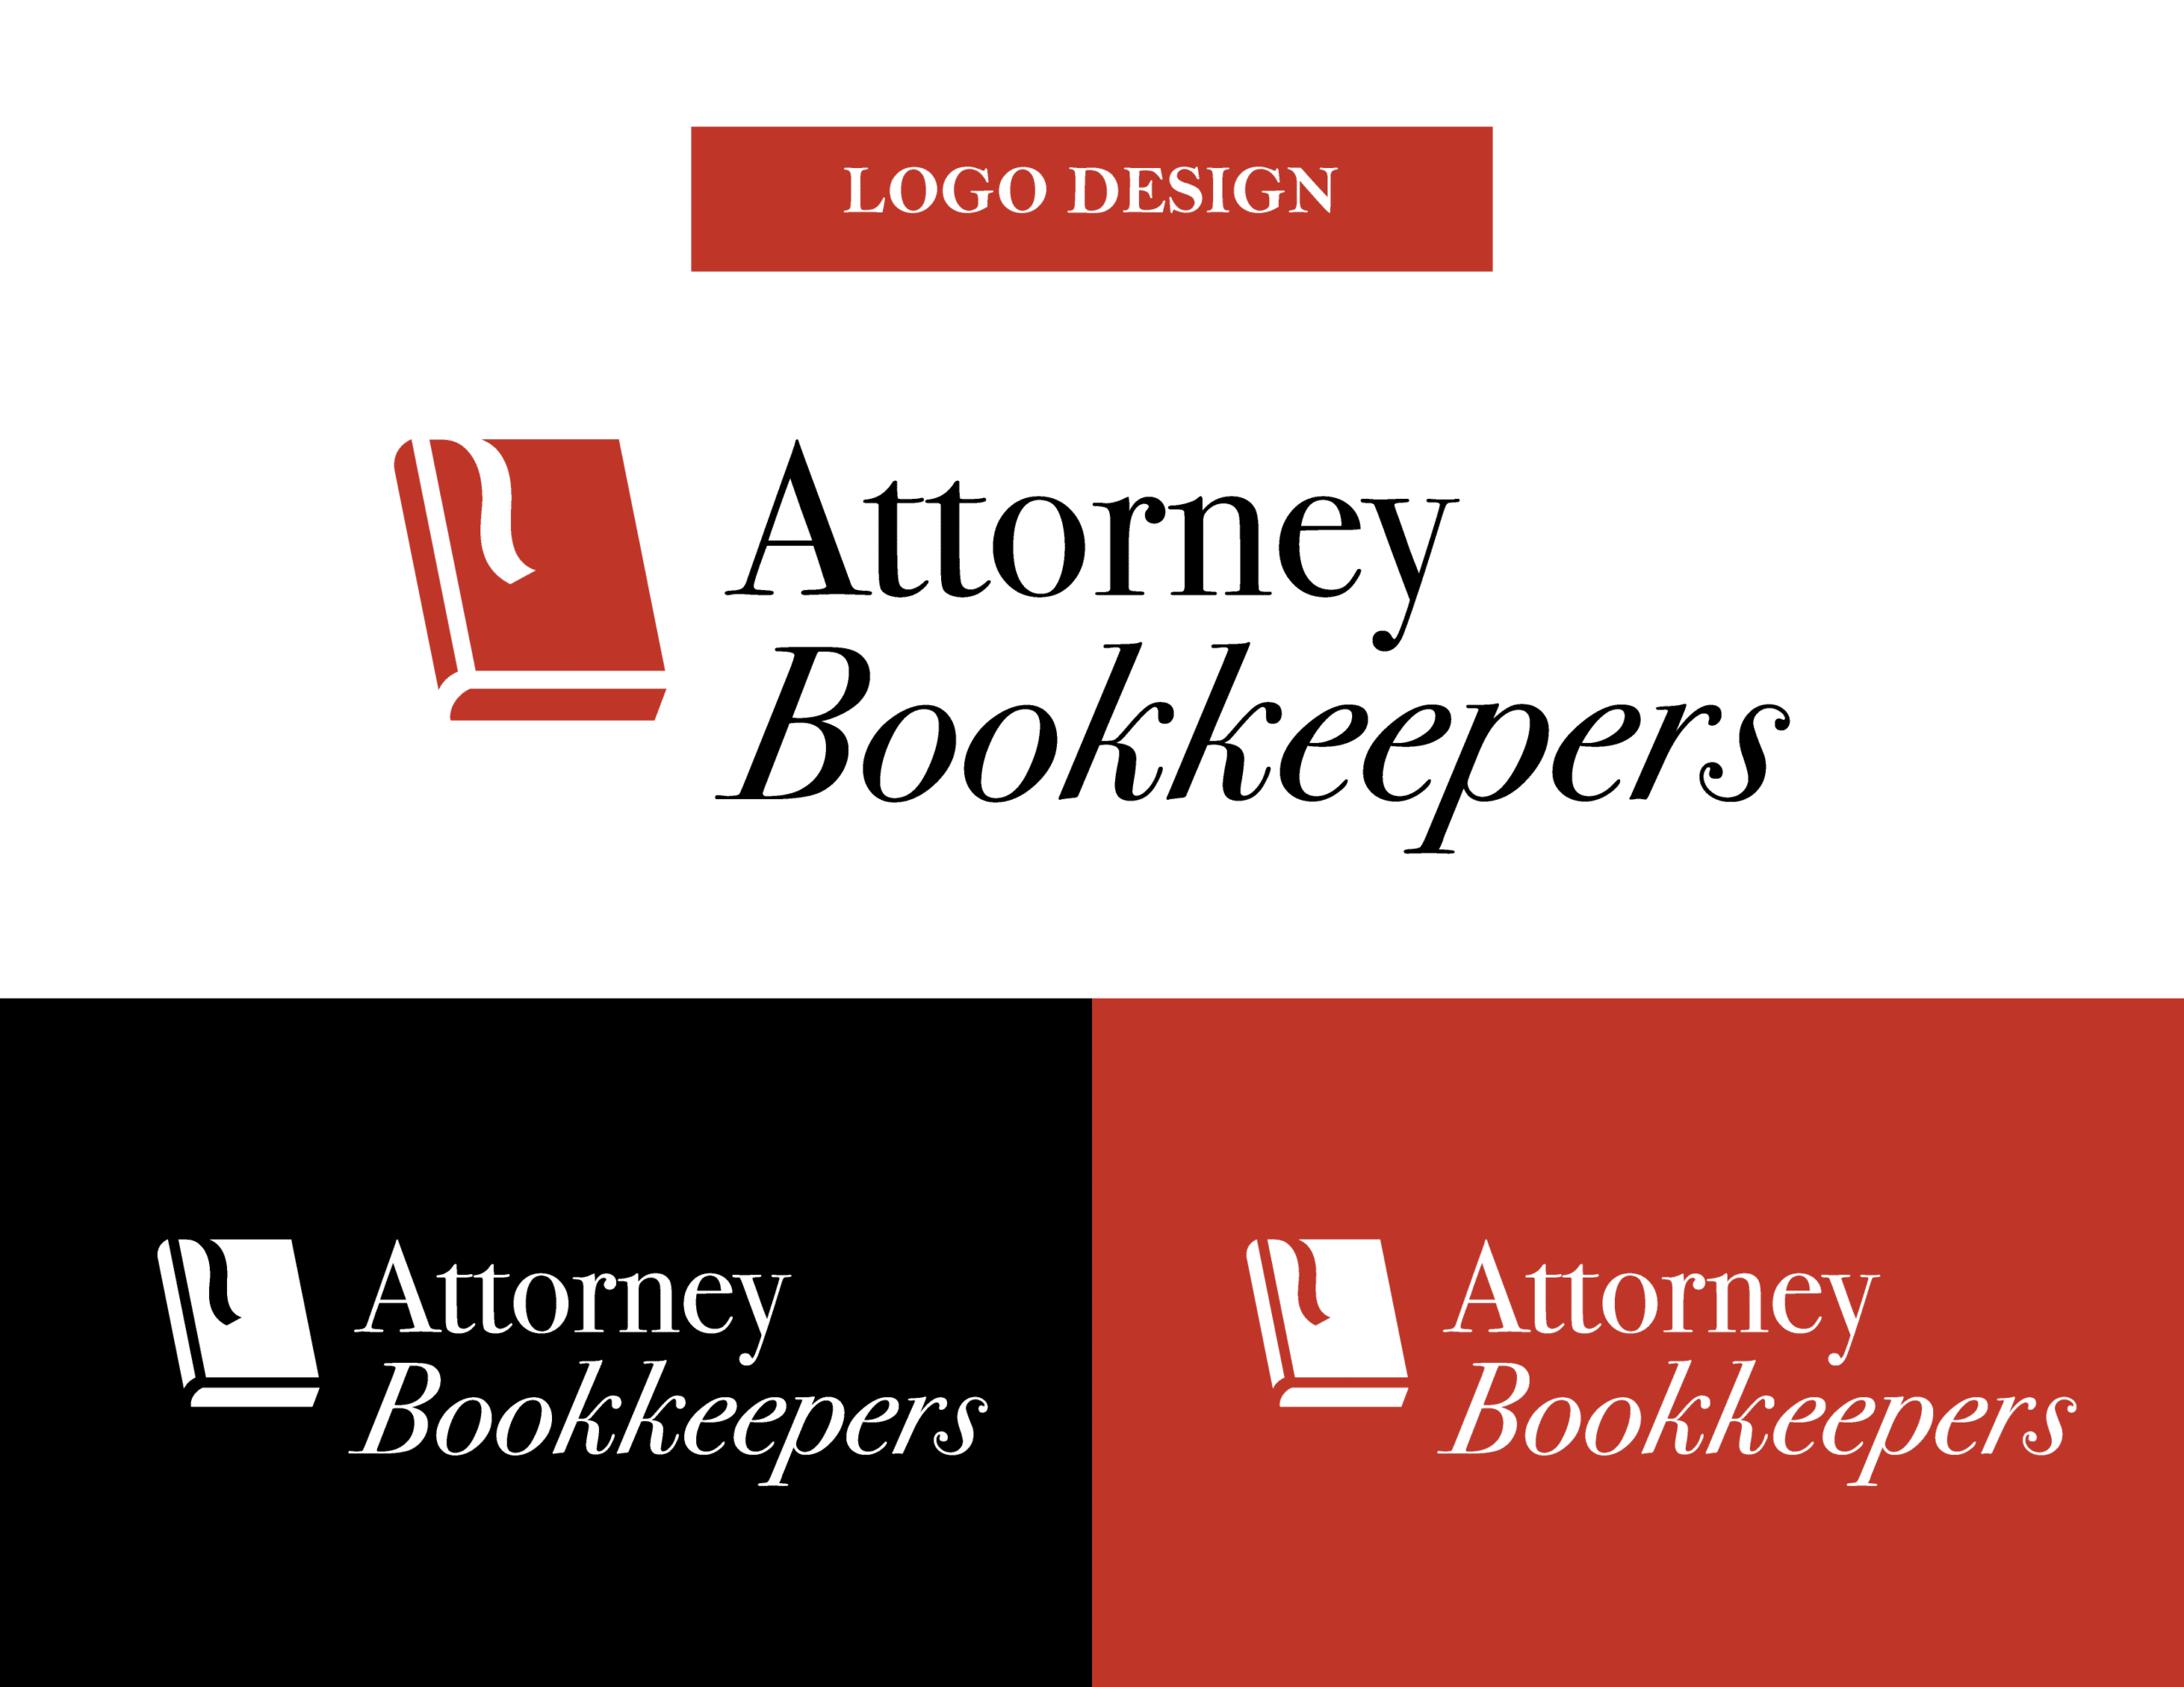 01AttorneyBookkeepERS_Showcase_Logo Design